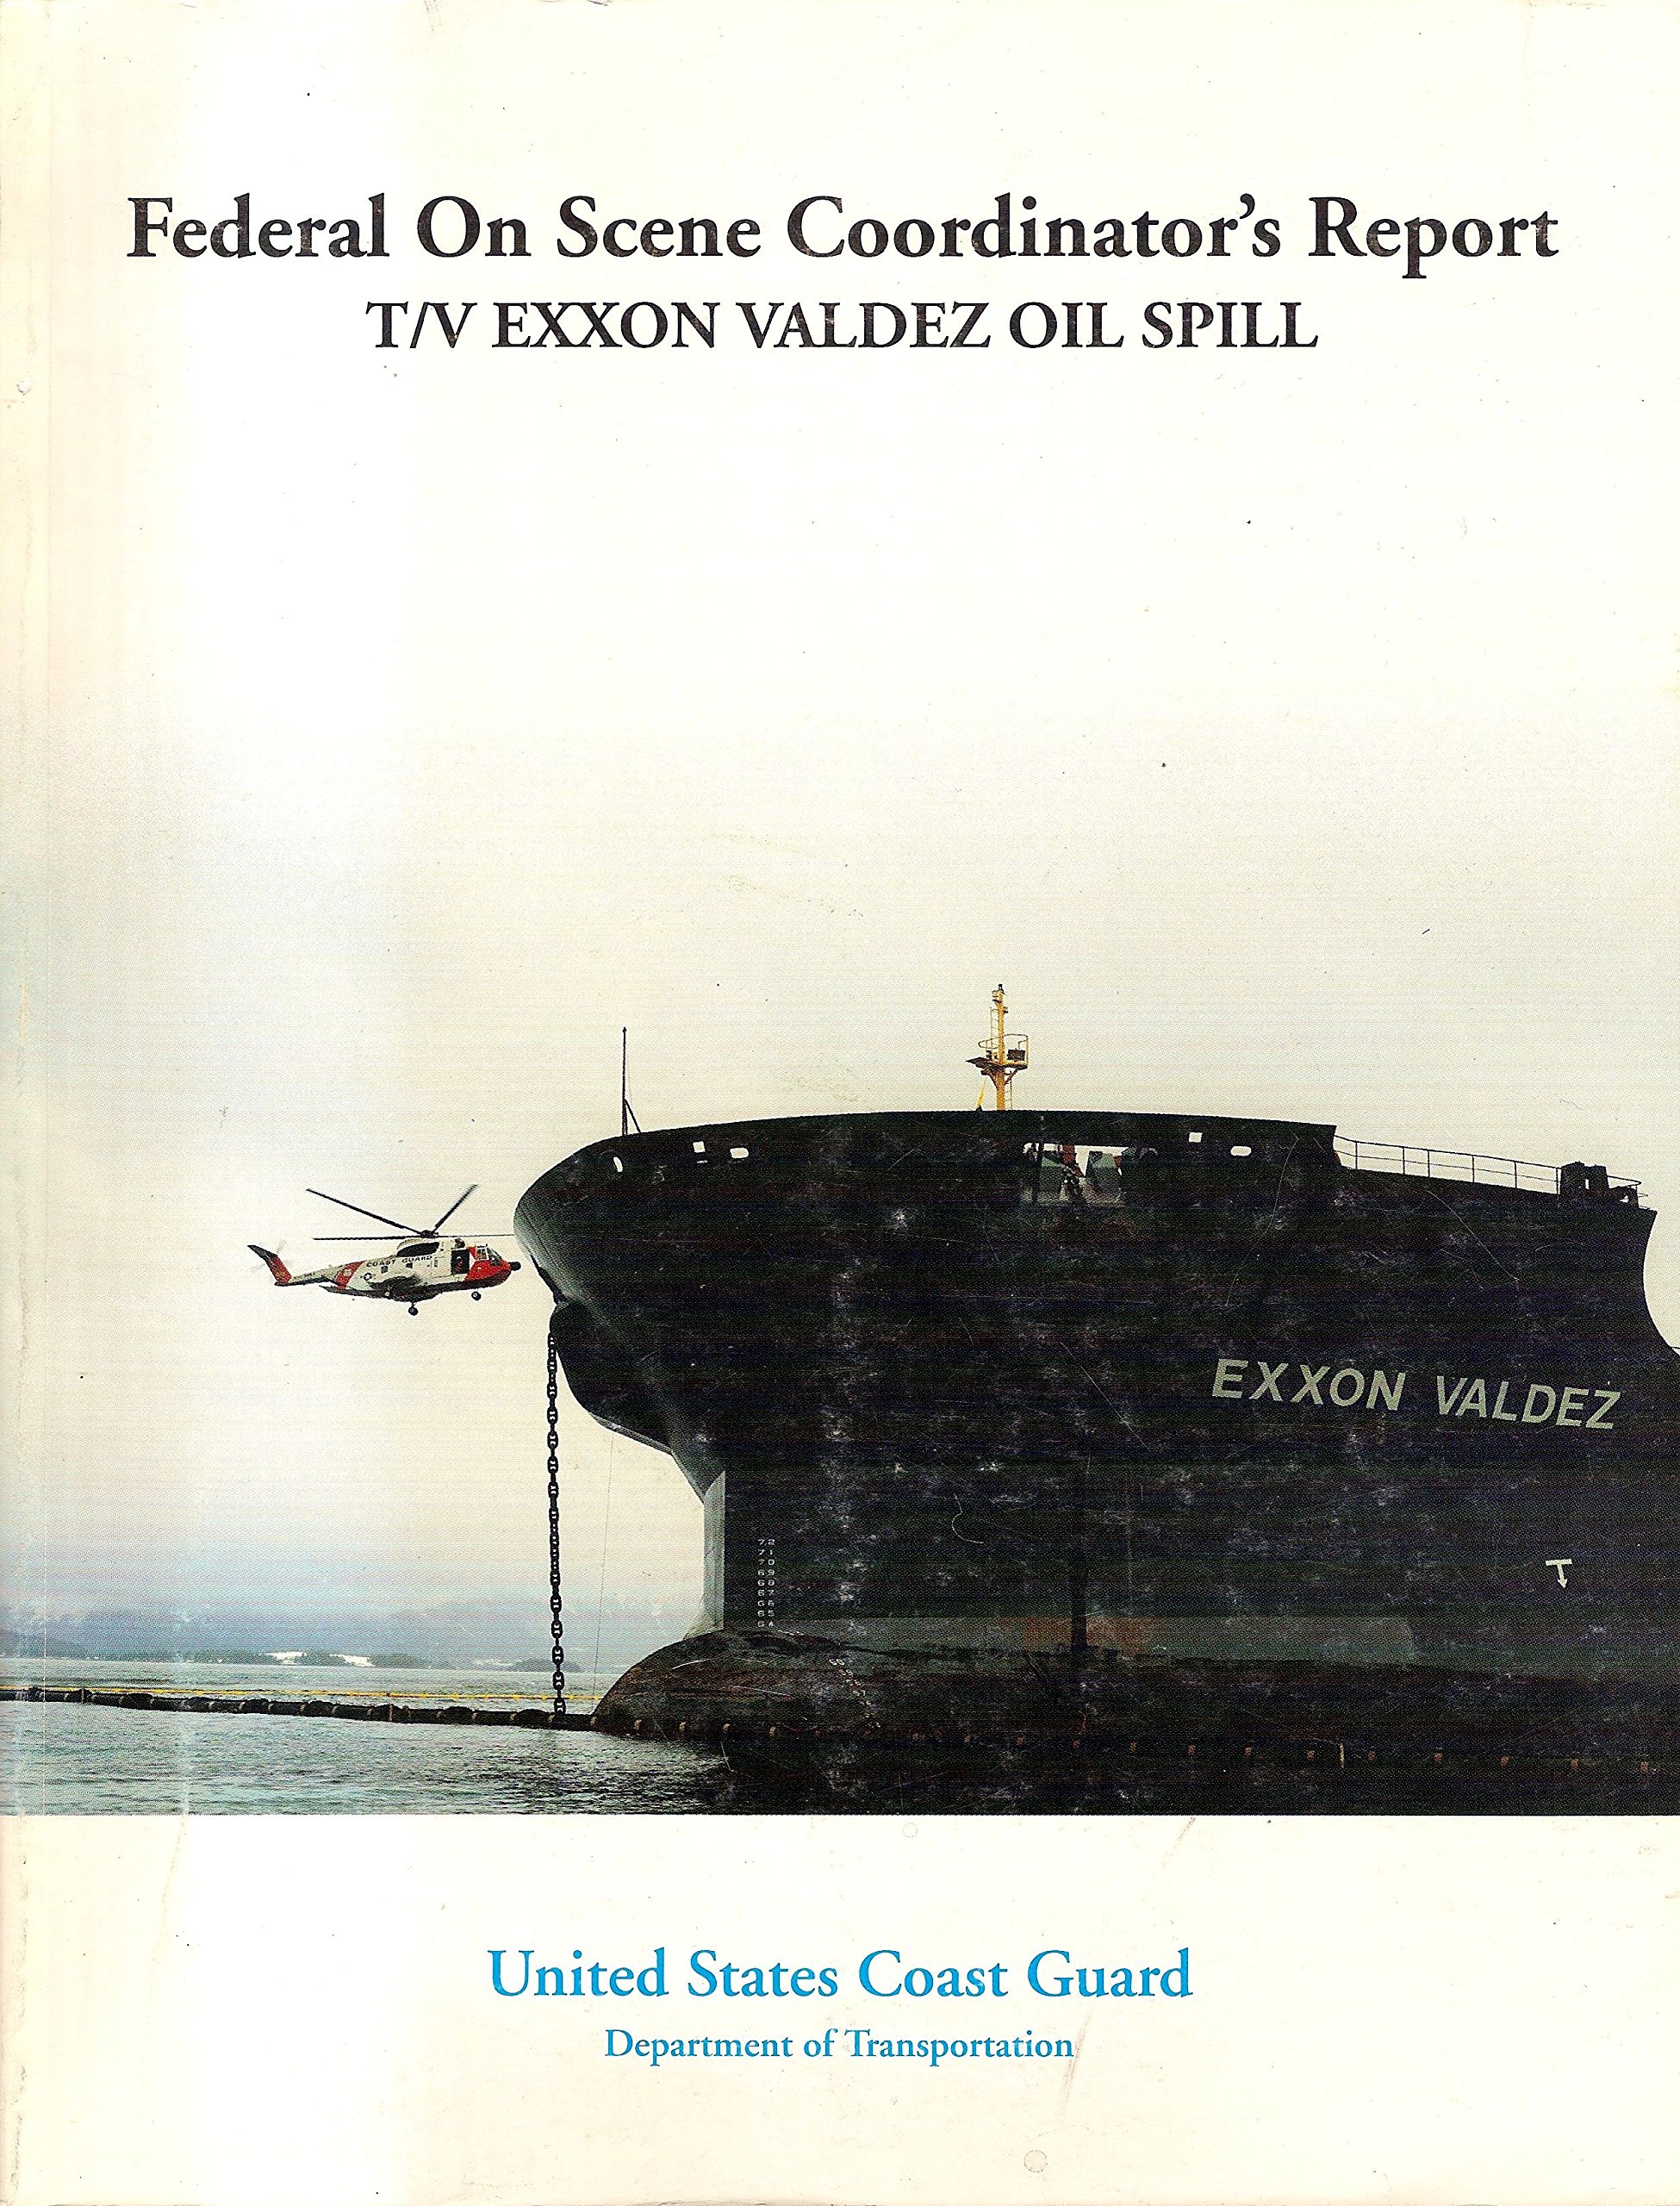 Cover of the board of inquiry report for the Exxon Valdez oil spill. (U.S. Coast Guard)